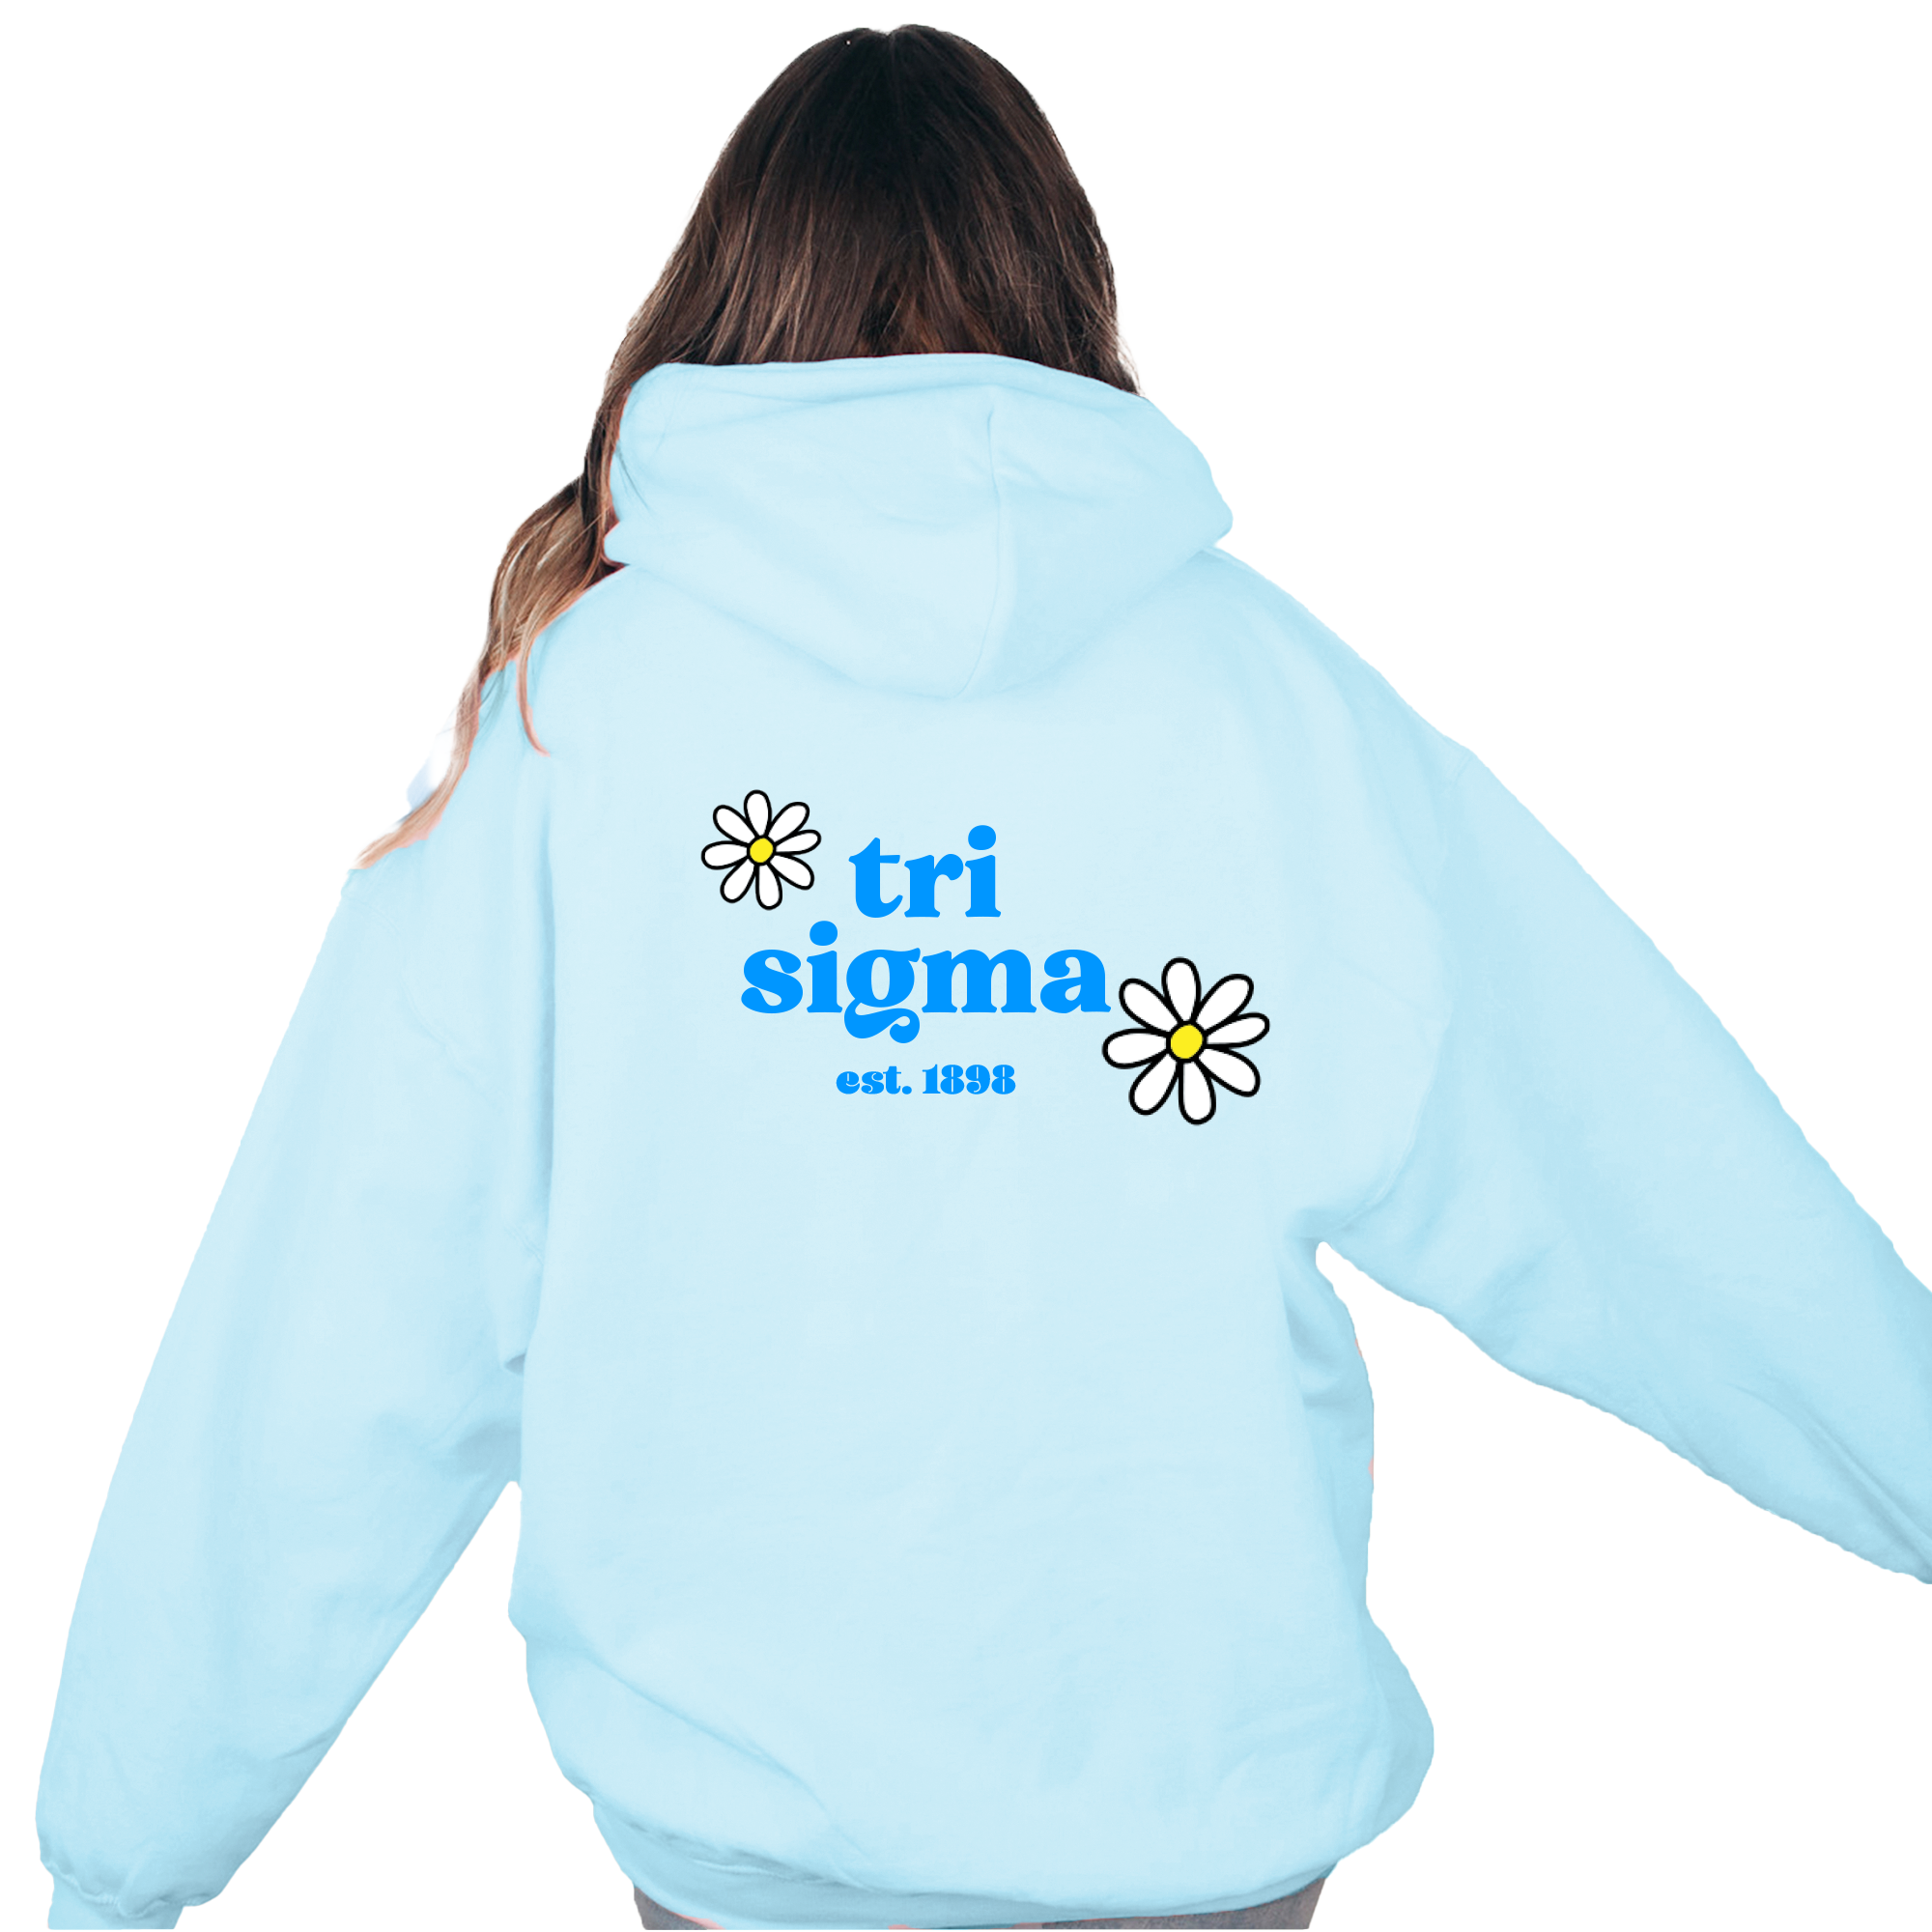 Sigma Sigma Sigma Hoodie - Tri Sigma, Blue Daisy Hoodie - Go Greek Chic